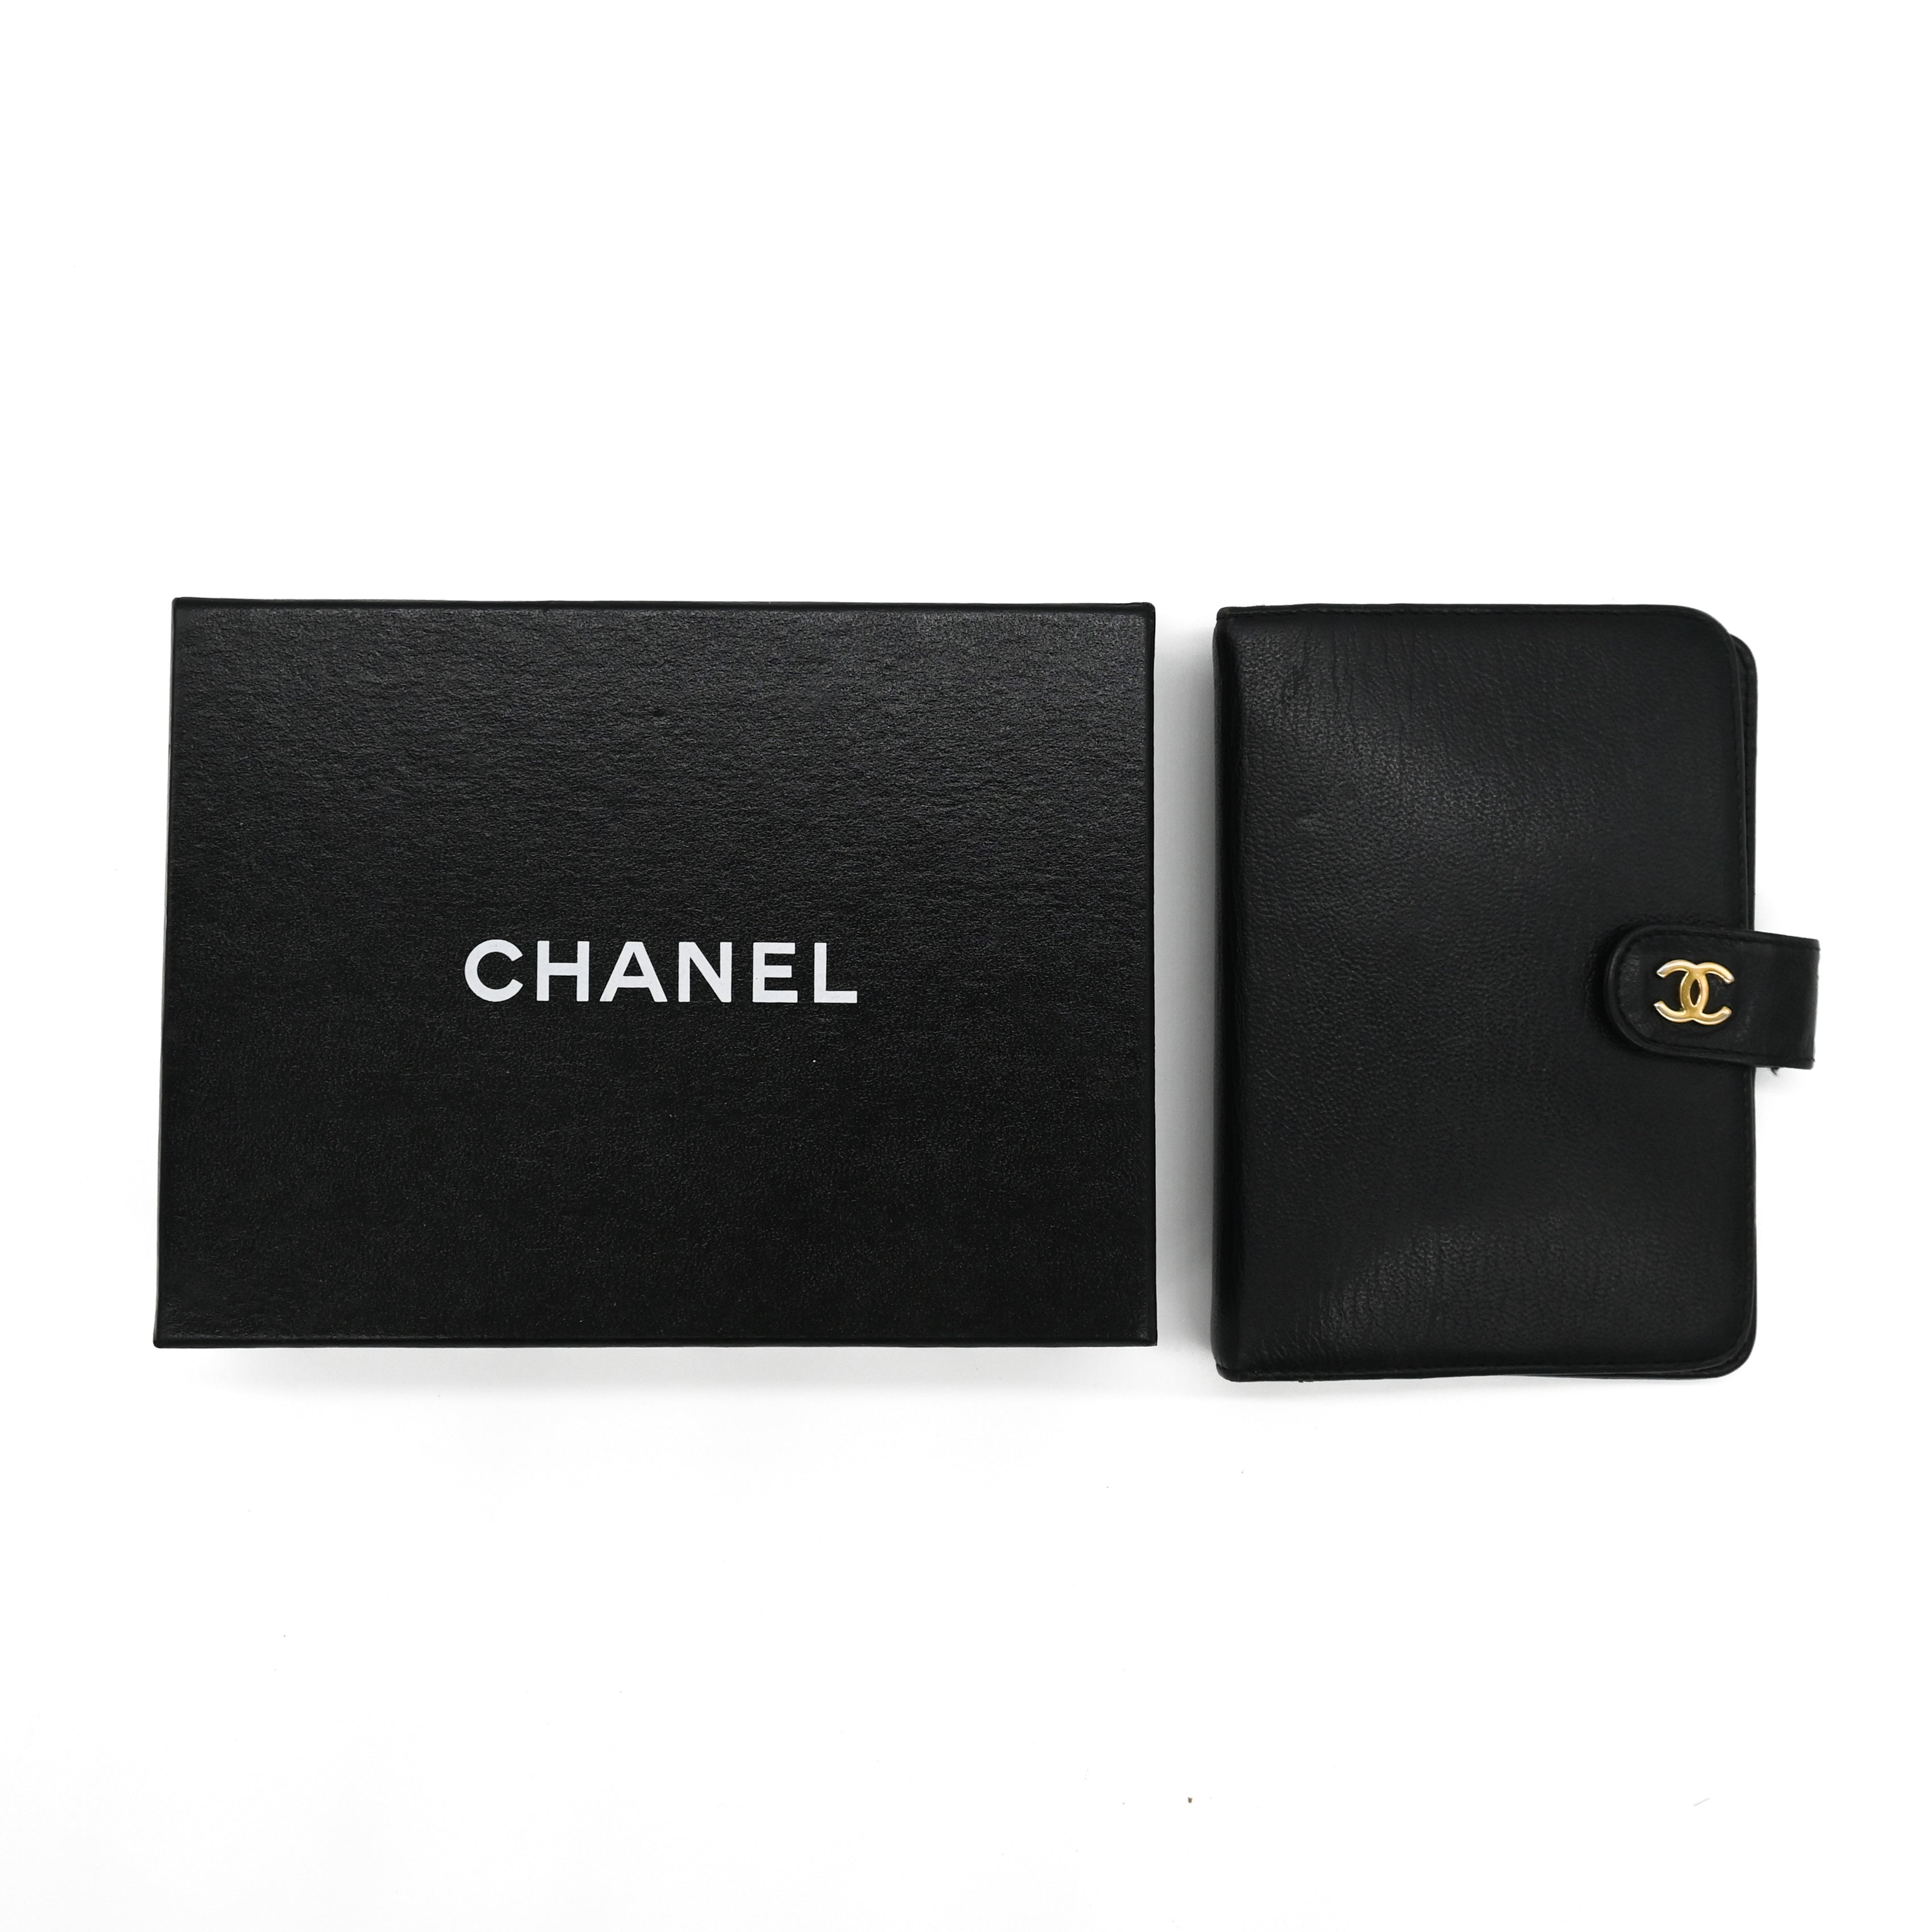 CHANEL Chanel Agenda - Vault 55